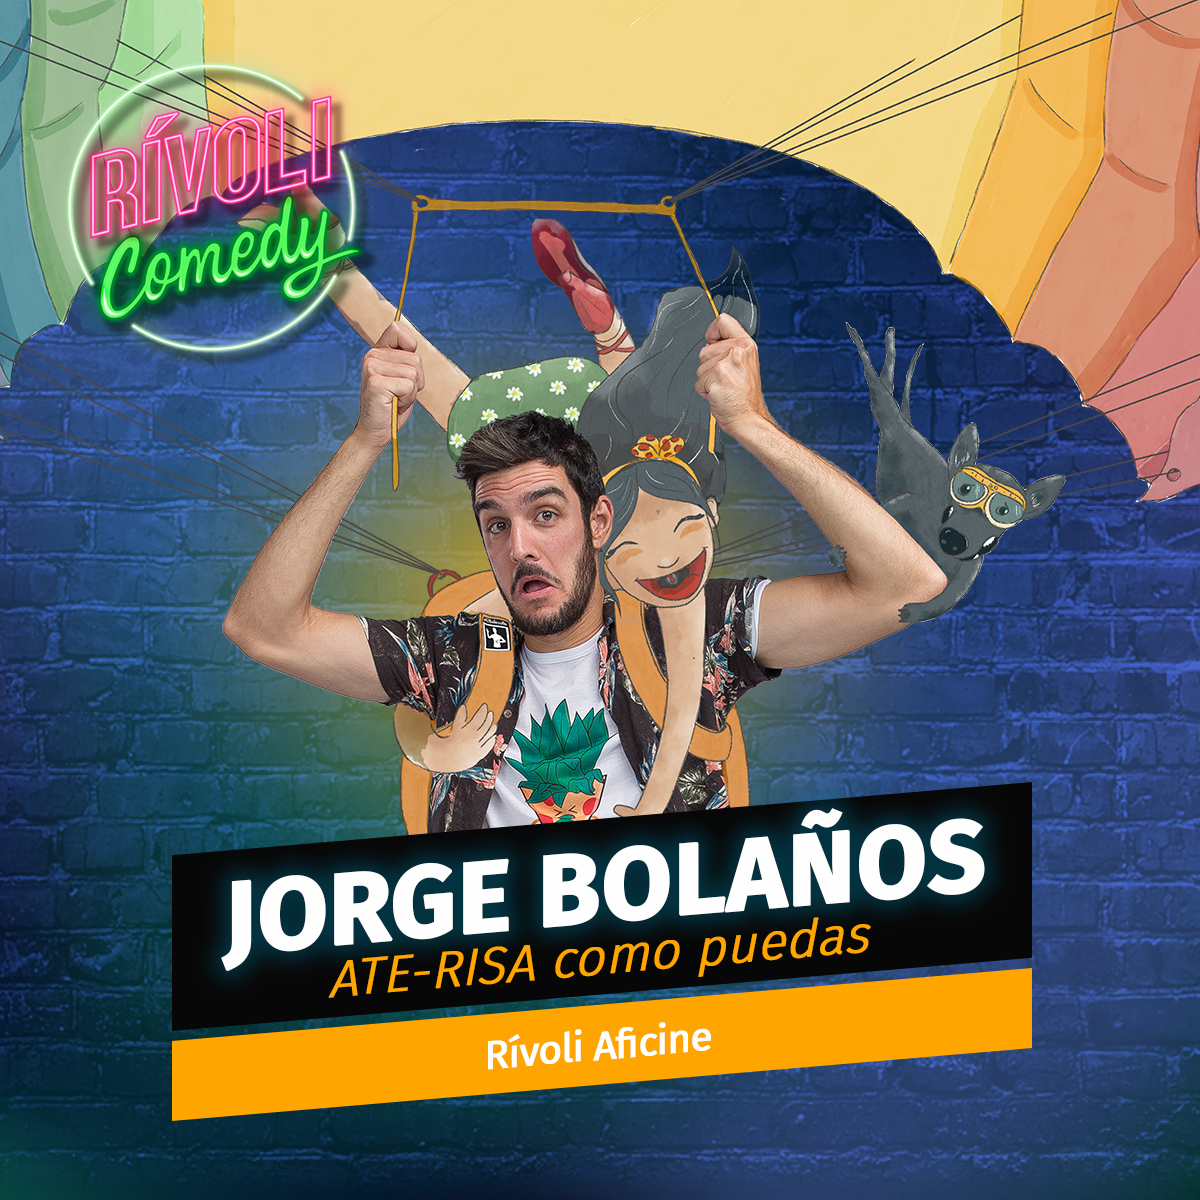 Jorge Bolaños | Ate-risa como puedas · 6 de mayo · Palma de Mallorca (Rívoli Comedy)